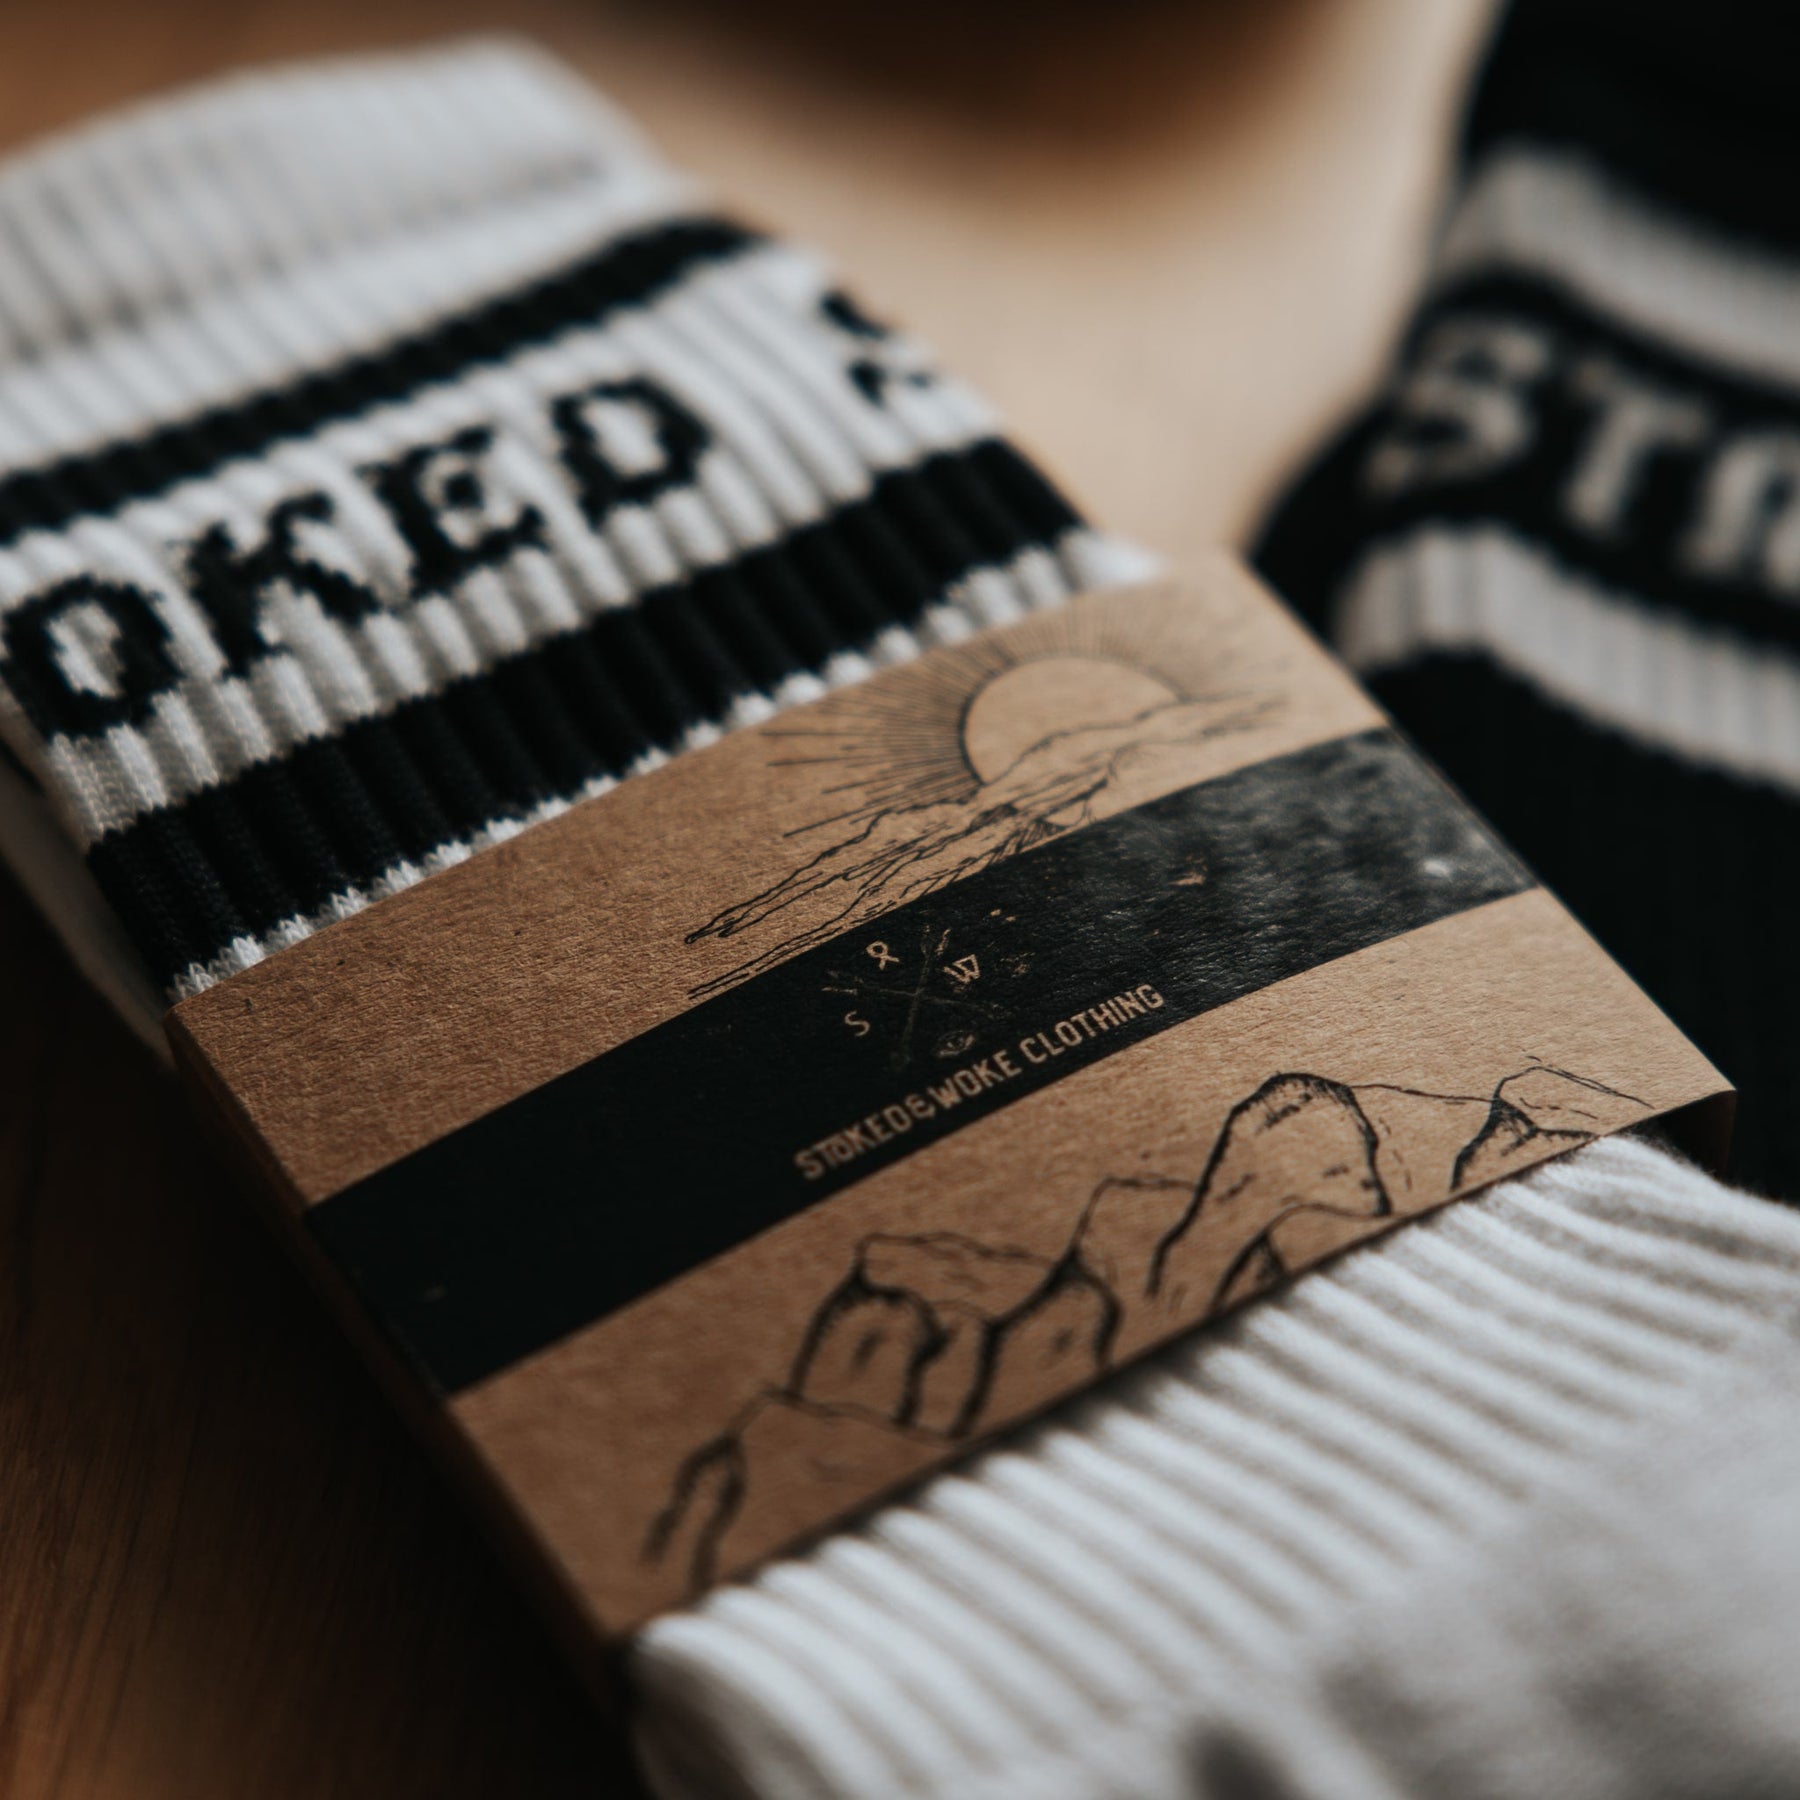 Organic "Stay Stoked" Socks - Stoked&Woke Clothing